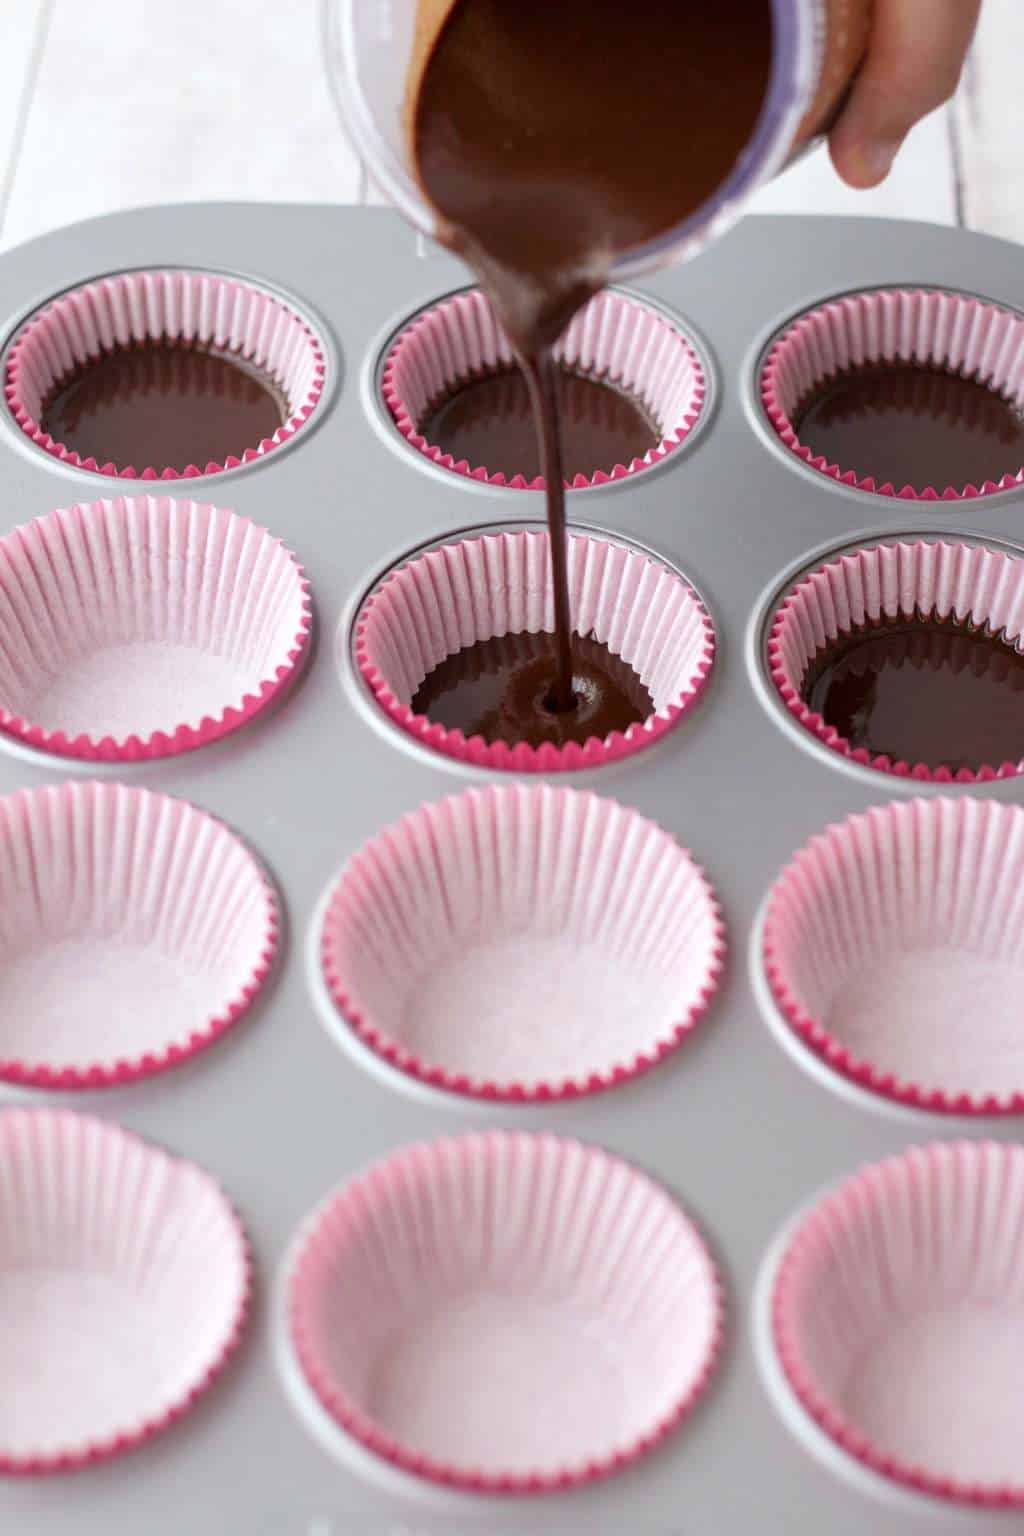 Making Raw Chocolate Hazelnut Cups #vegan #lovingitvegan #raw #rawvegan #chocolate #dessert #glutenfree #dairyfree